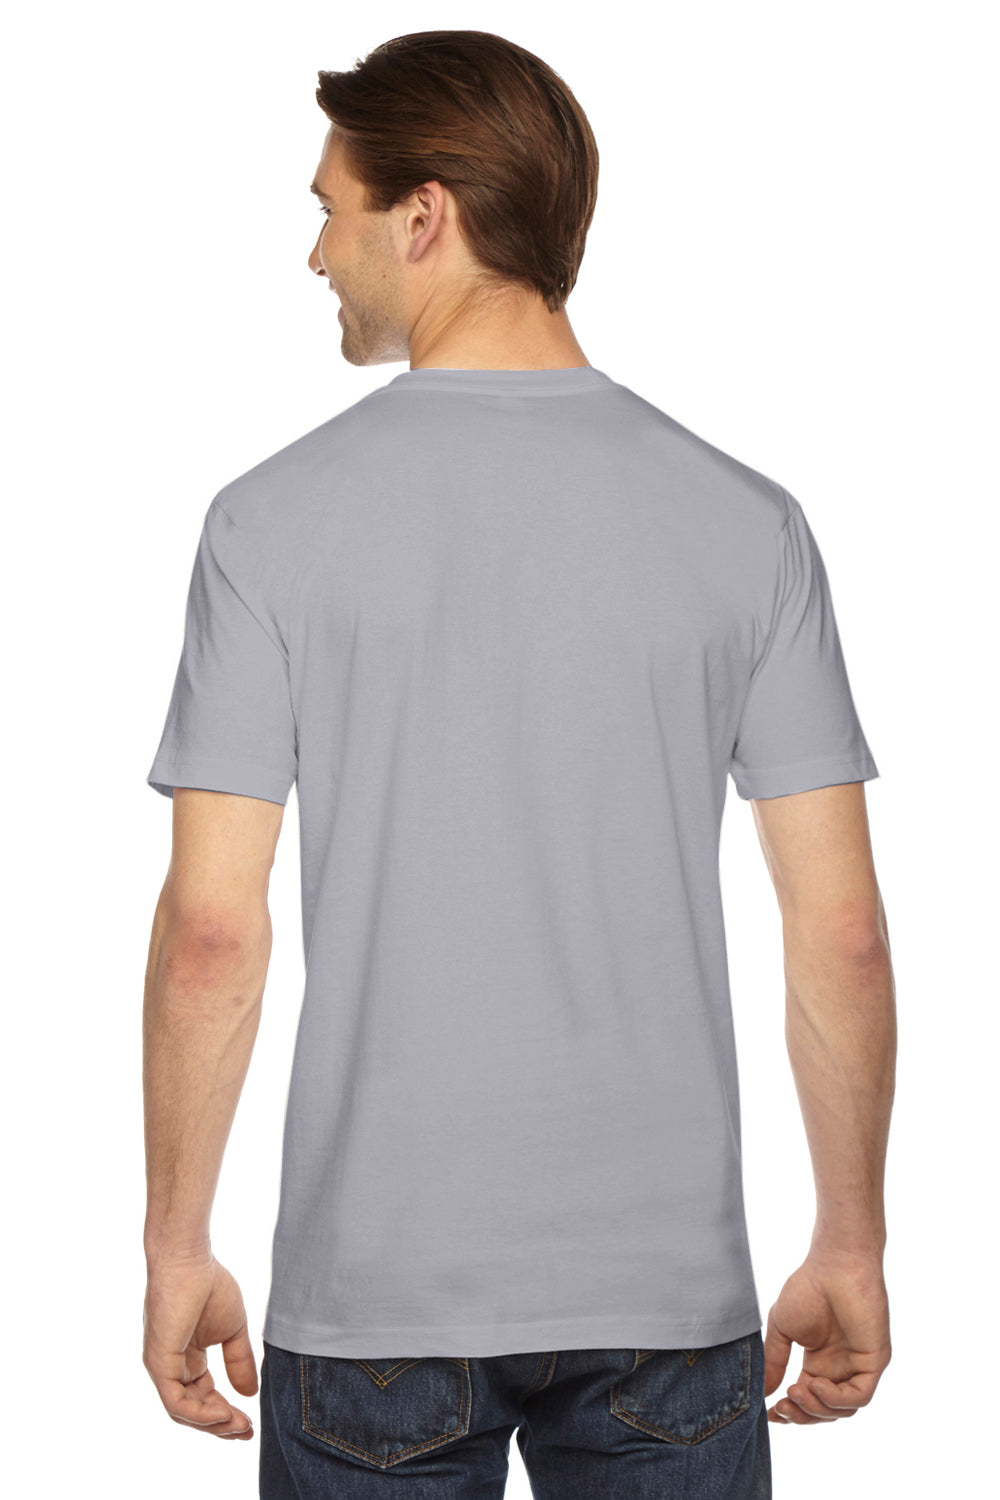 American Apparel 2001 Mens USA Made Fine Jersey Short Sleeve Crewneck T-Shirt Slate Grey Back